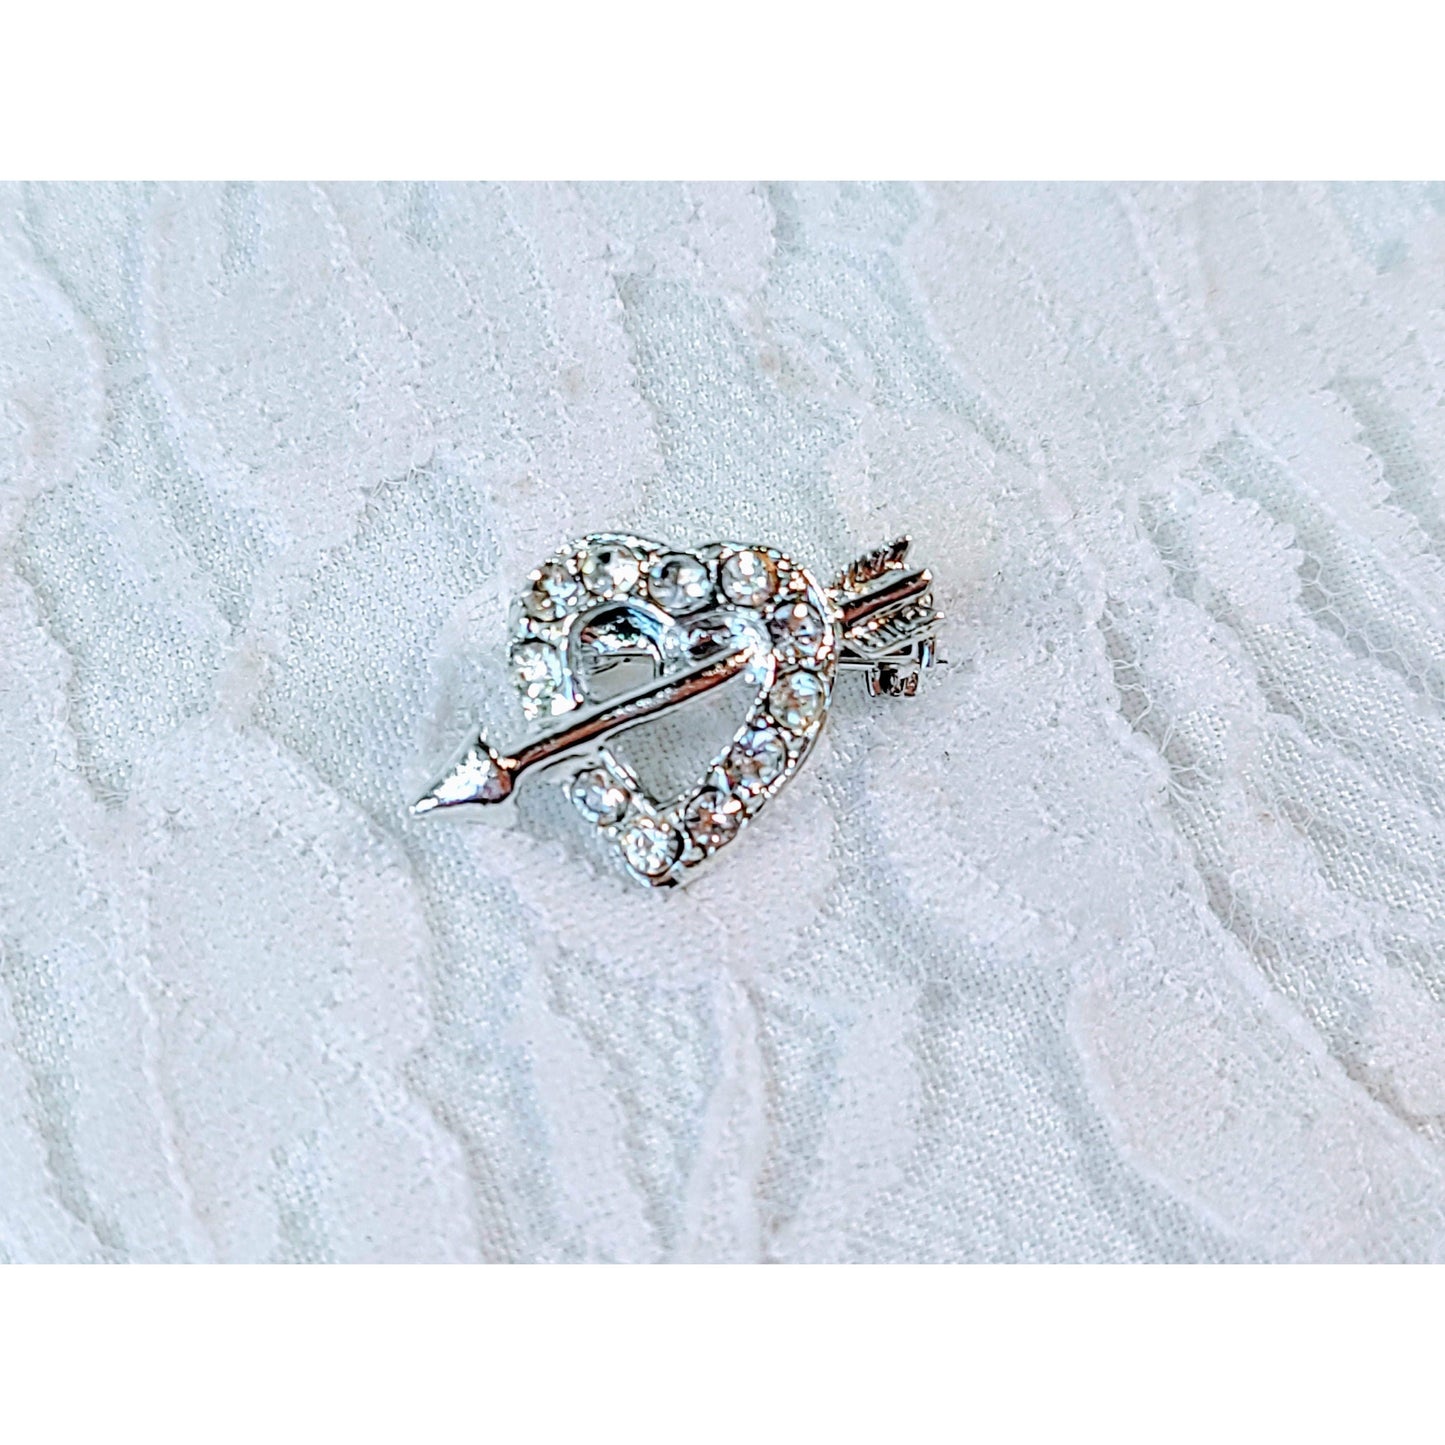 Antique Rhinestone Brooch 1950s Heart & Arrow Clear Cut Glass ~ Silver Paste Brooch ~ Vintage Rhinestone Pin